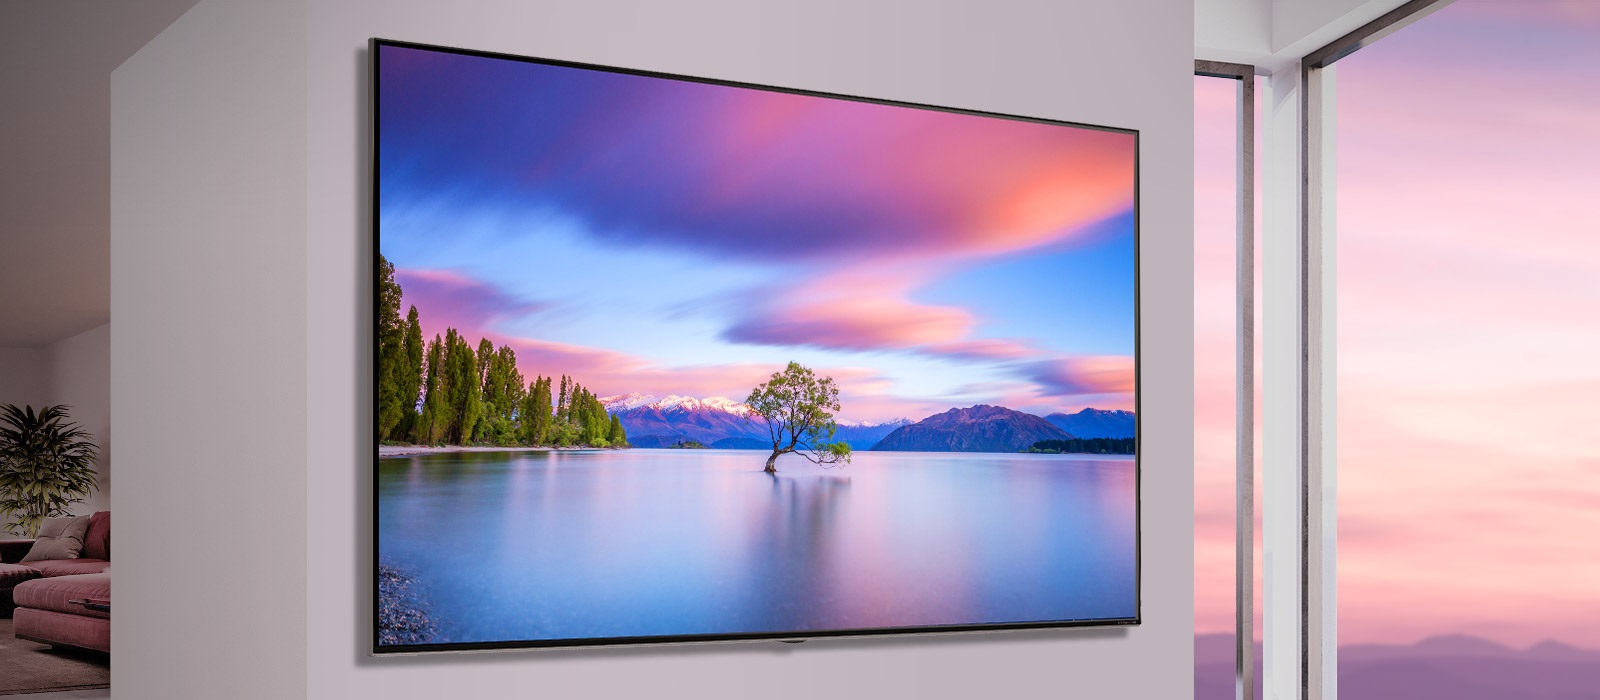 نقد و بررسی مشخصات تلویزیون هوشمند ال جی 65UP7600 محصول 2021